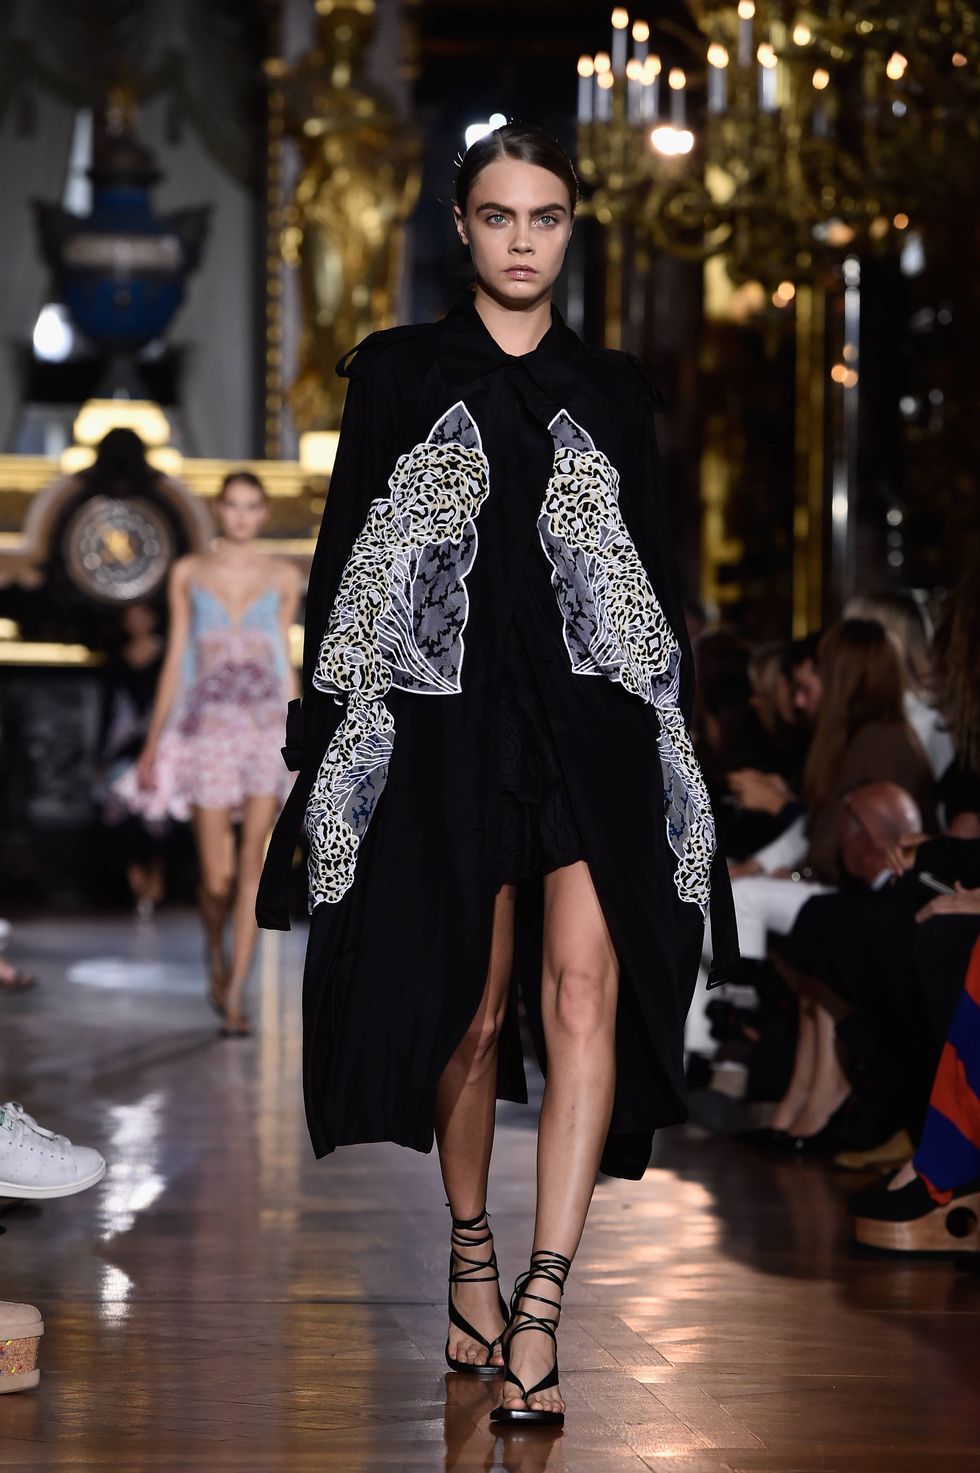 Cara Delevingne Saint Laurent spring 2015 catwalk model Paris fashion week instagram